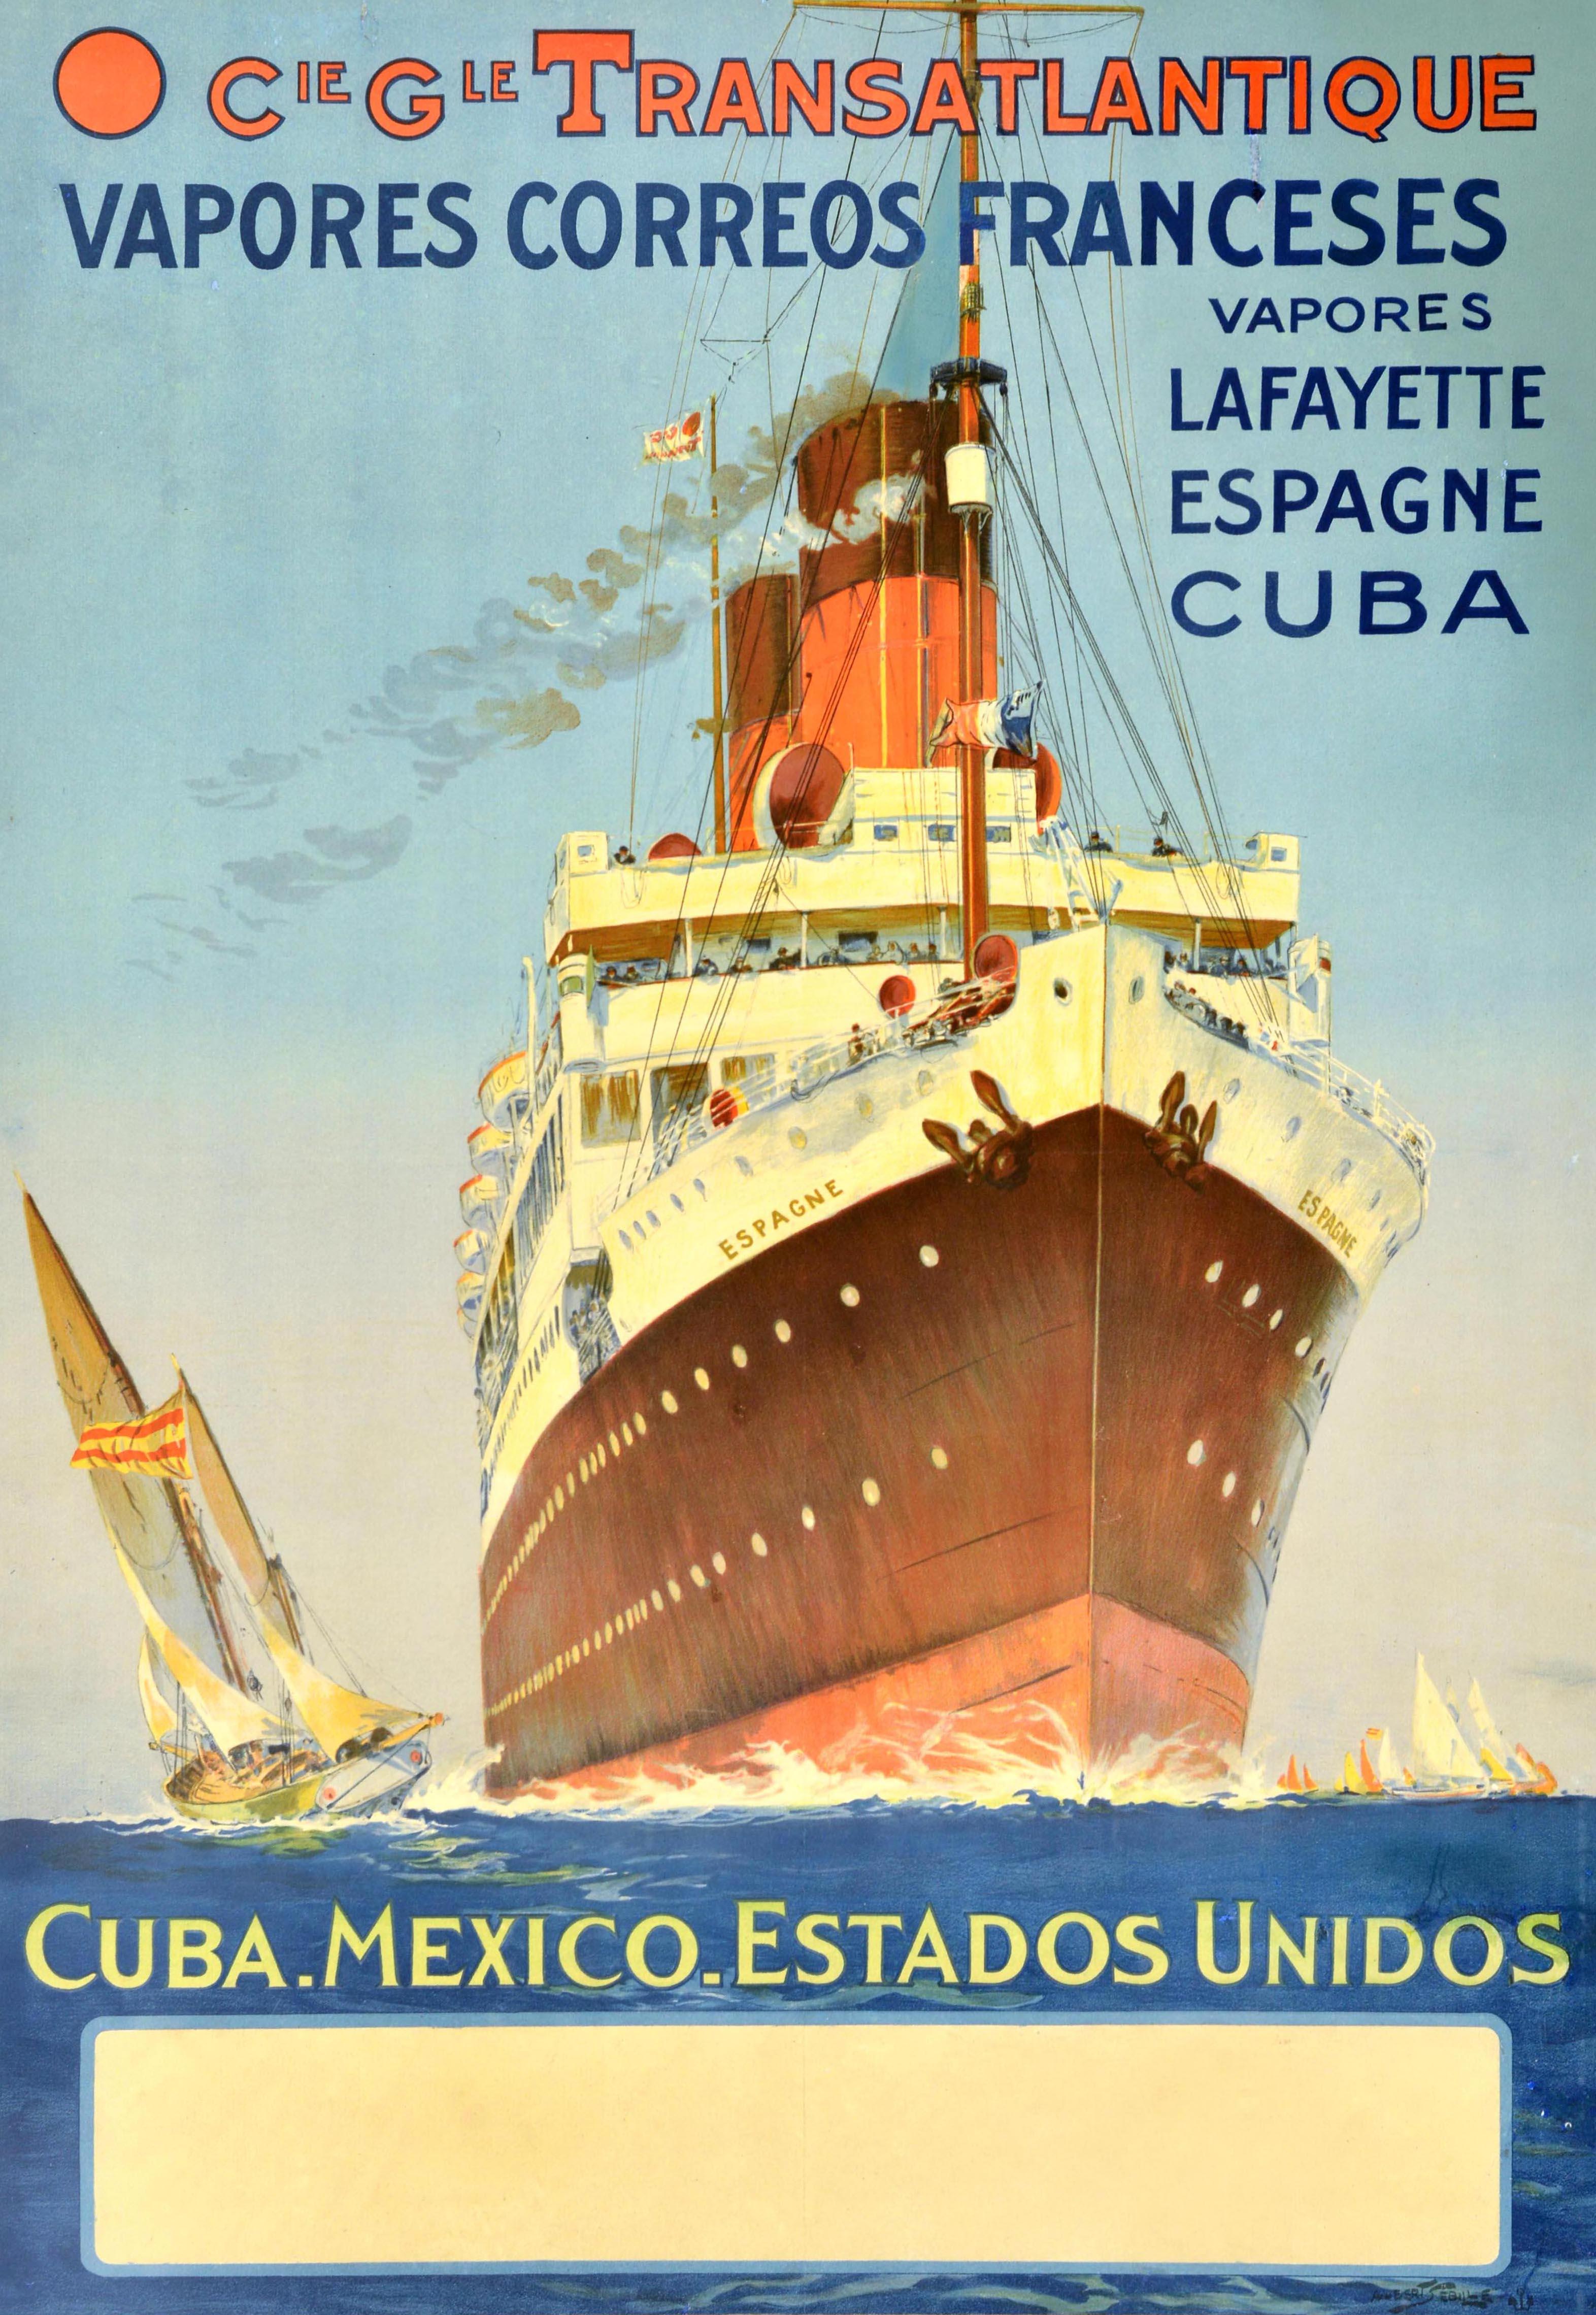 Original Vintage Steam Ship Cruise Travel Poster Cie Gle Transatlantique Espagne - Print by Albert Sebille